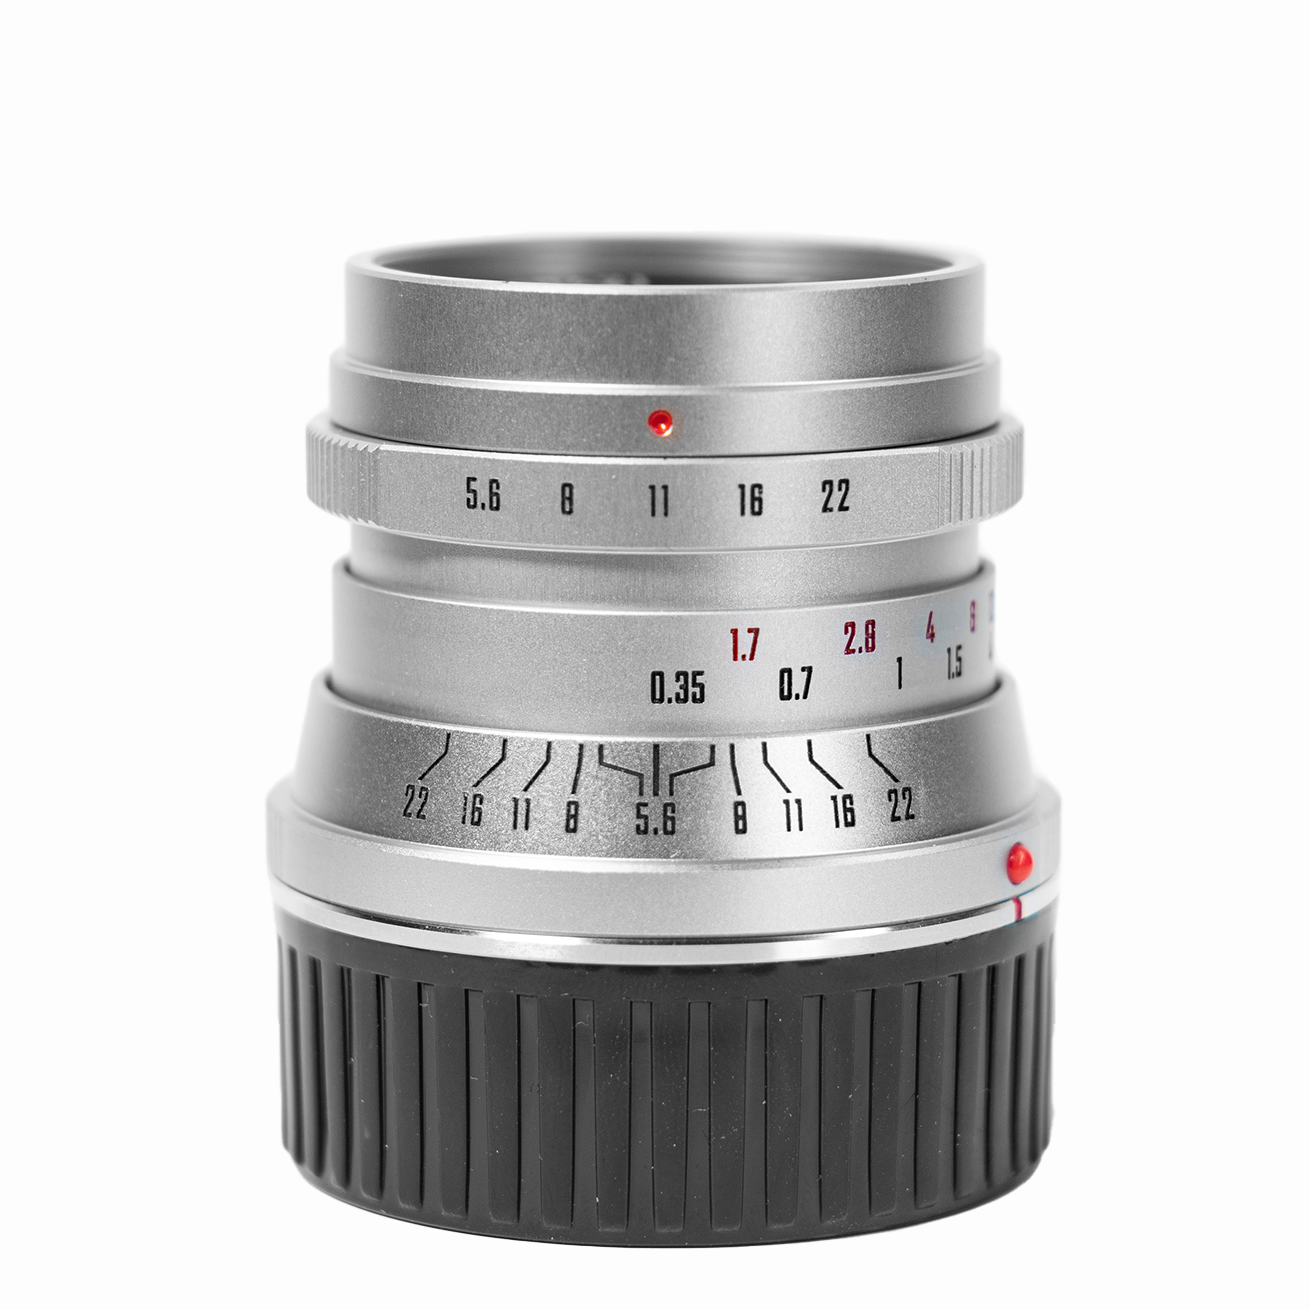 Mitakon Zhongyi Creator 28mm f/5.6 Lens for Sony E